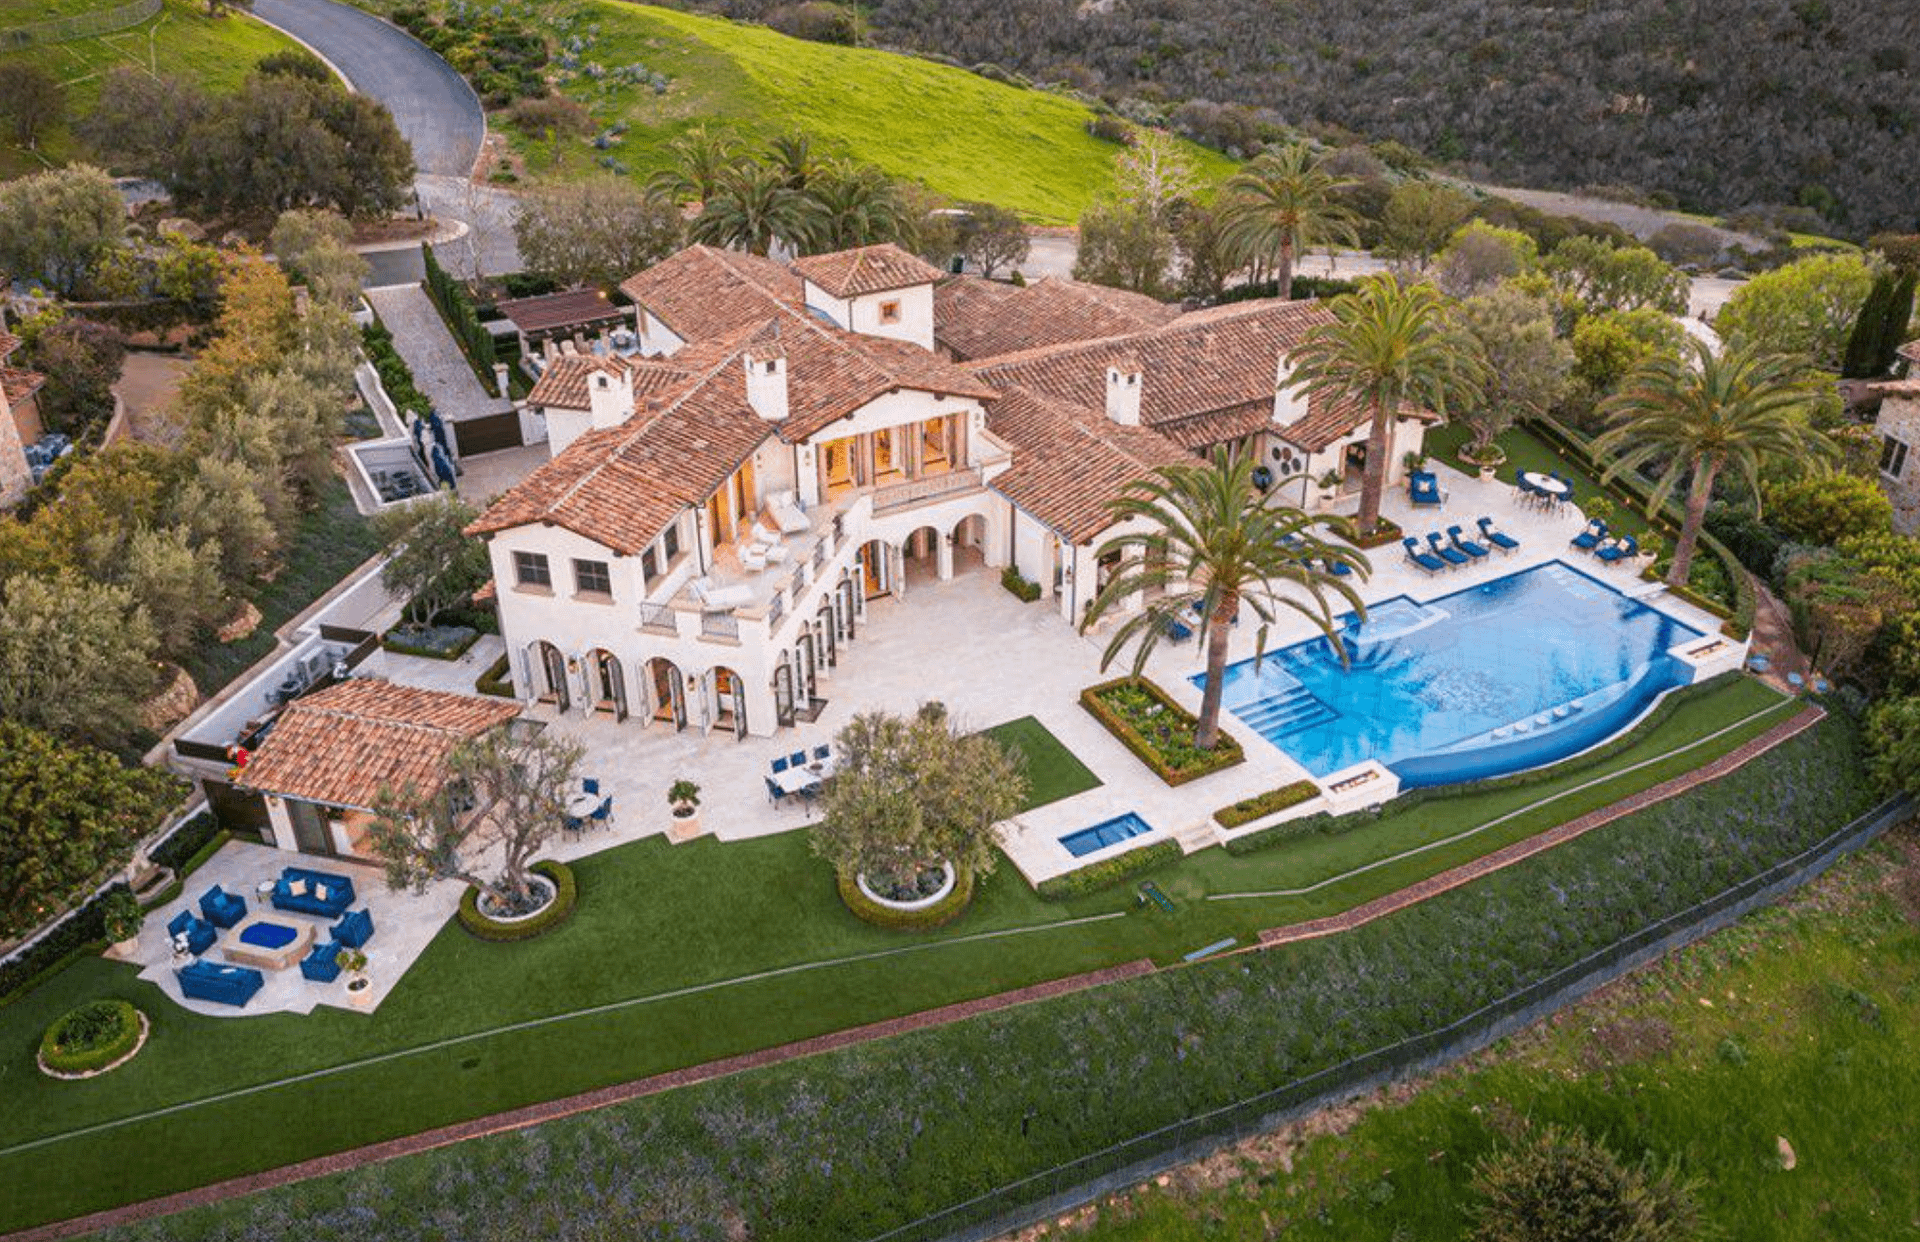  Million Mediterranean Home In Irvine, California (PHOTOS)